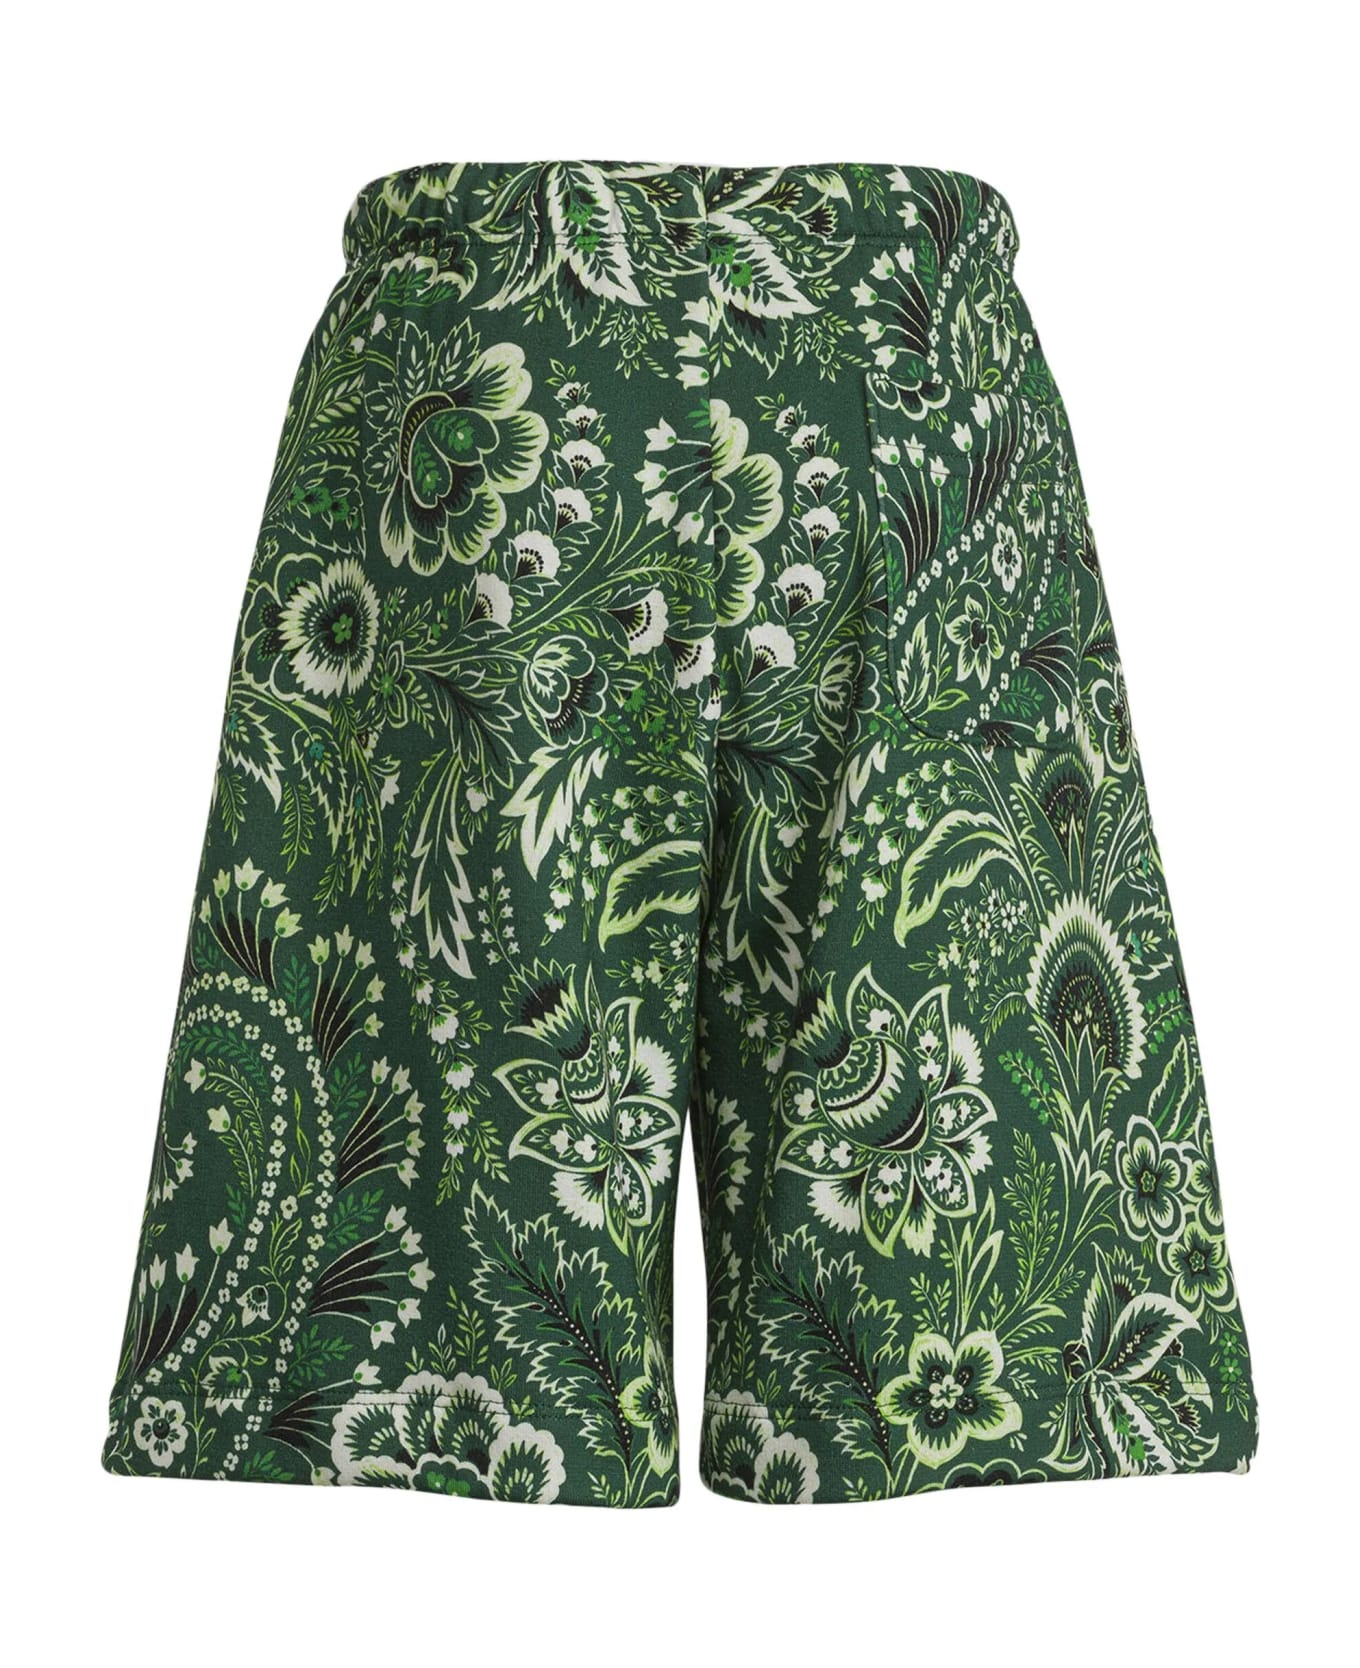 Etro Green Sports Bermuda Shorts With Paisley Print - Green